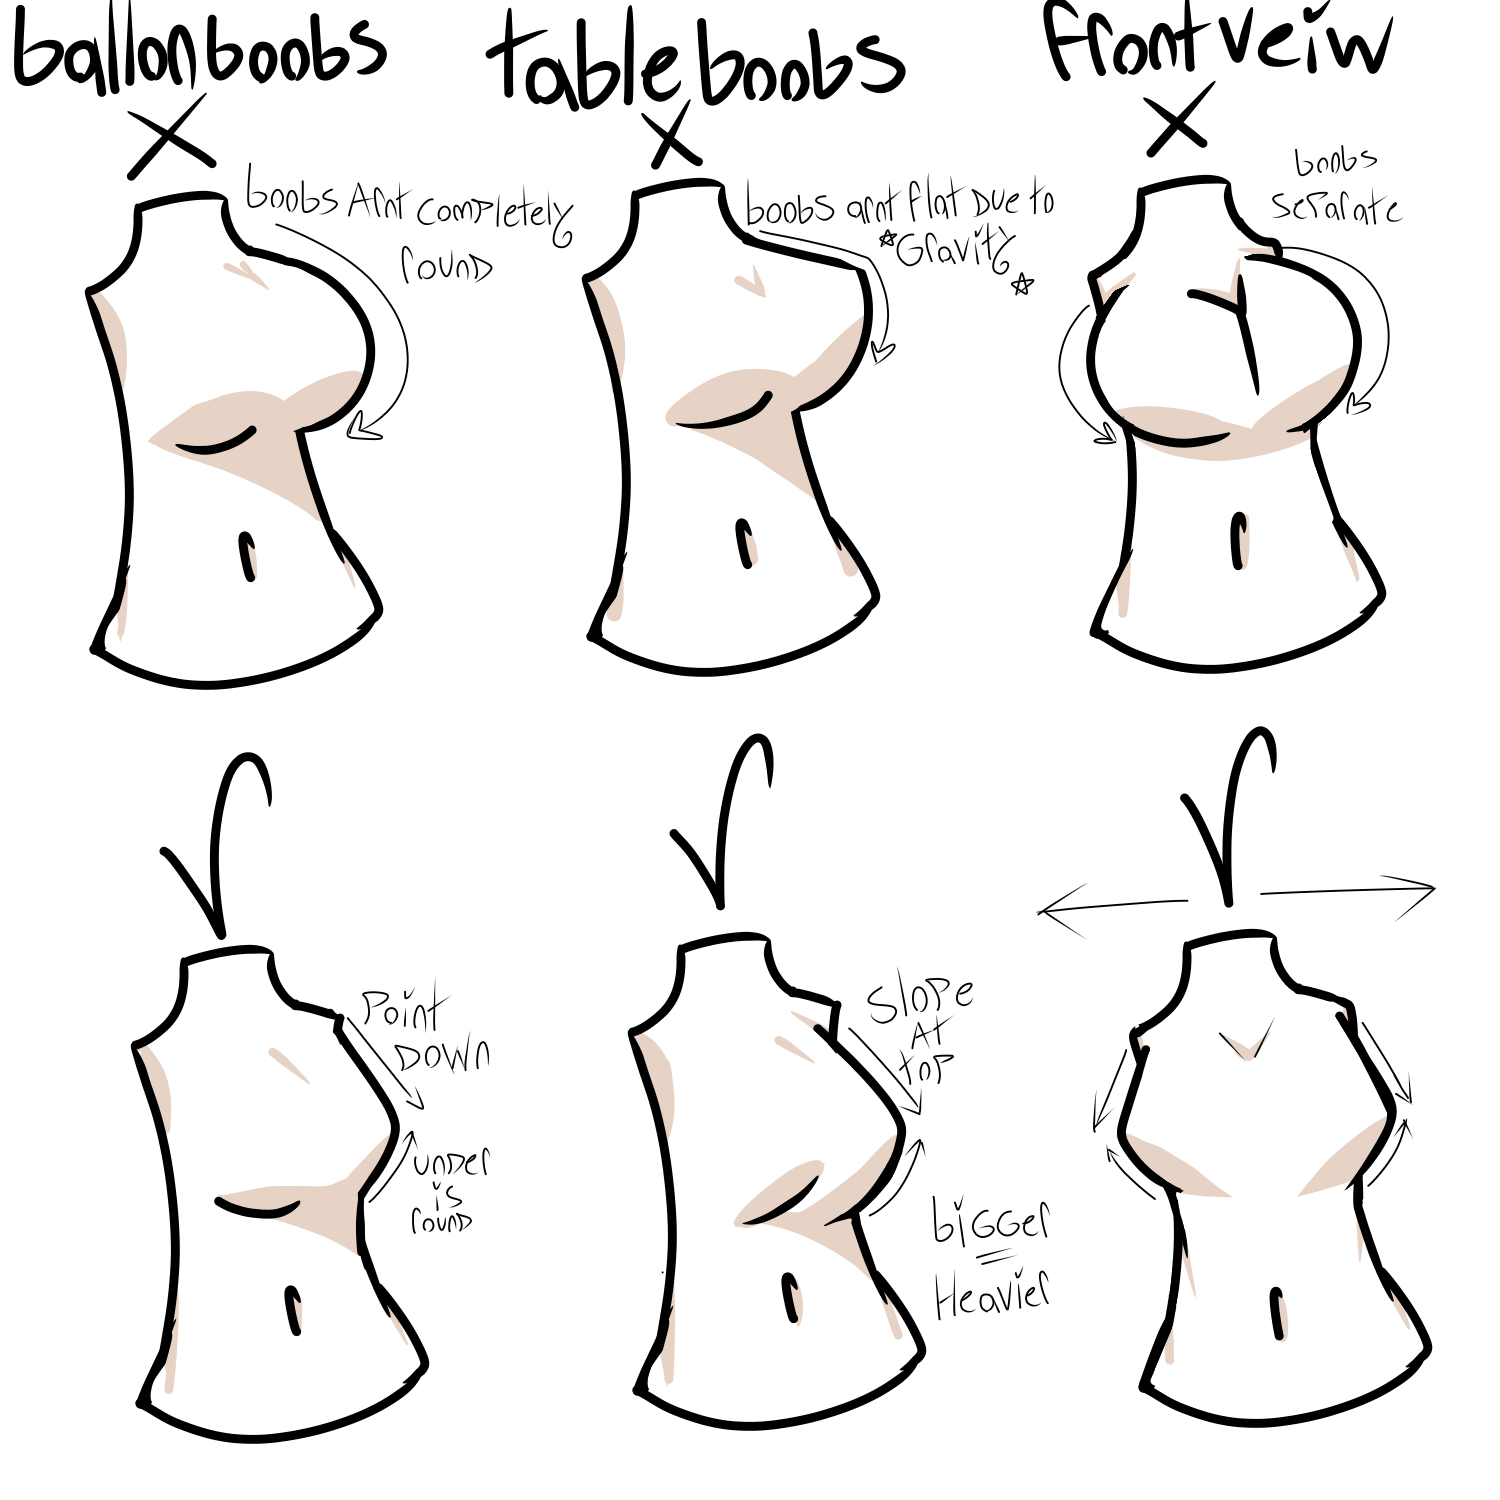 boobs on the table